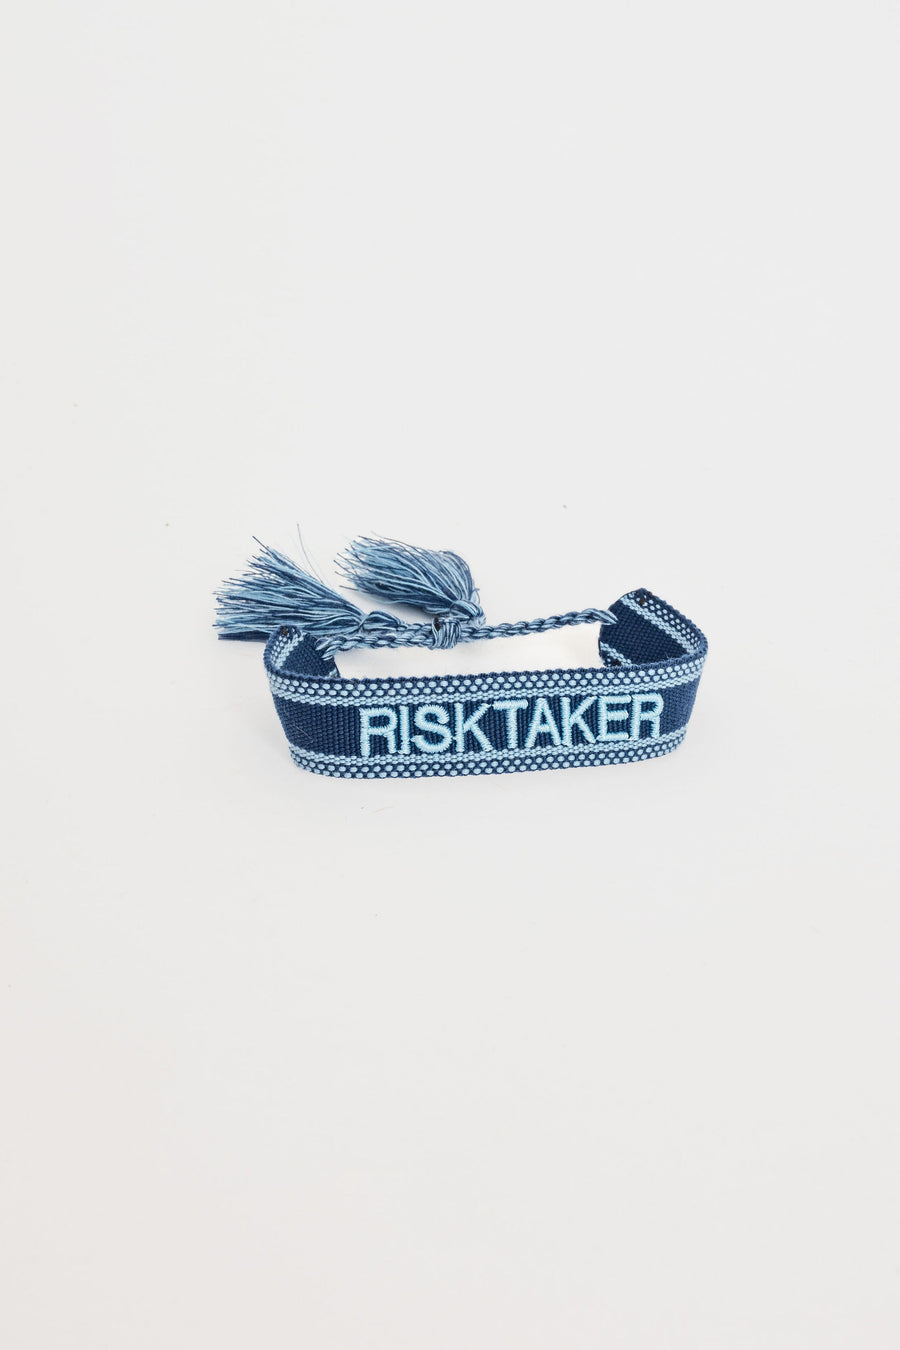 Risktaker Woven Bracelet *Limited*Edition*